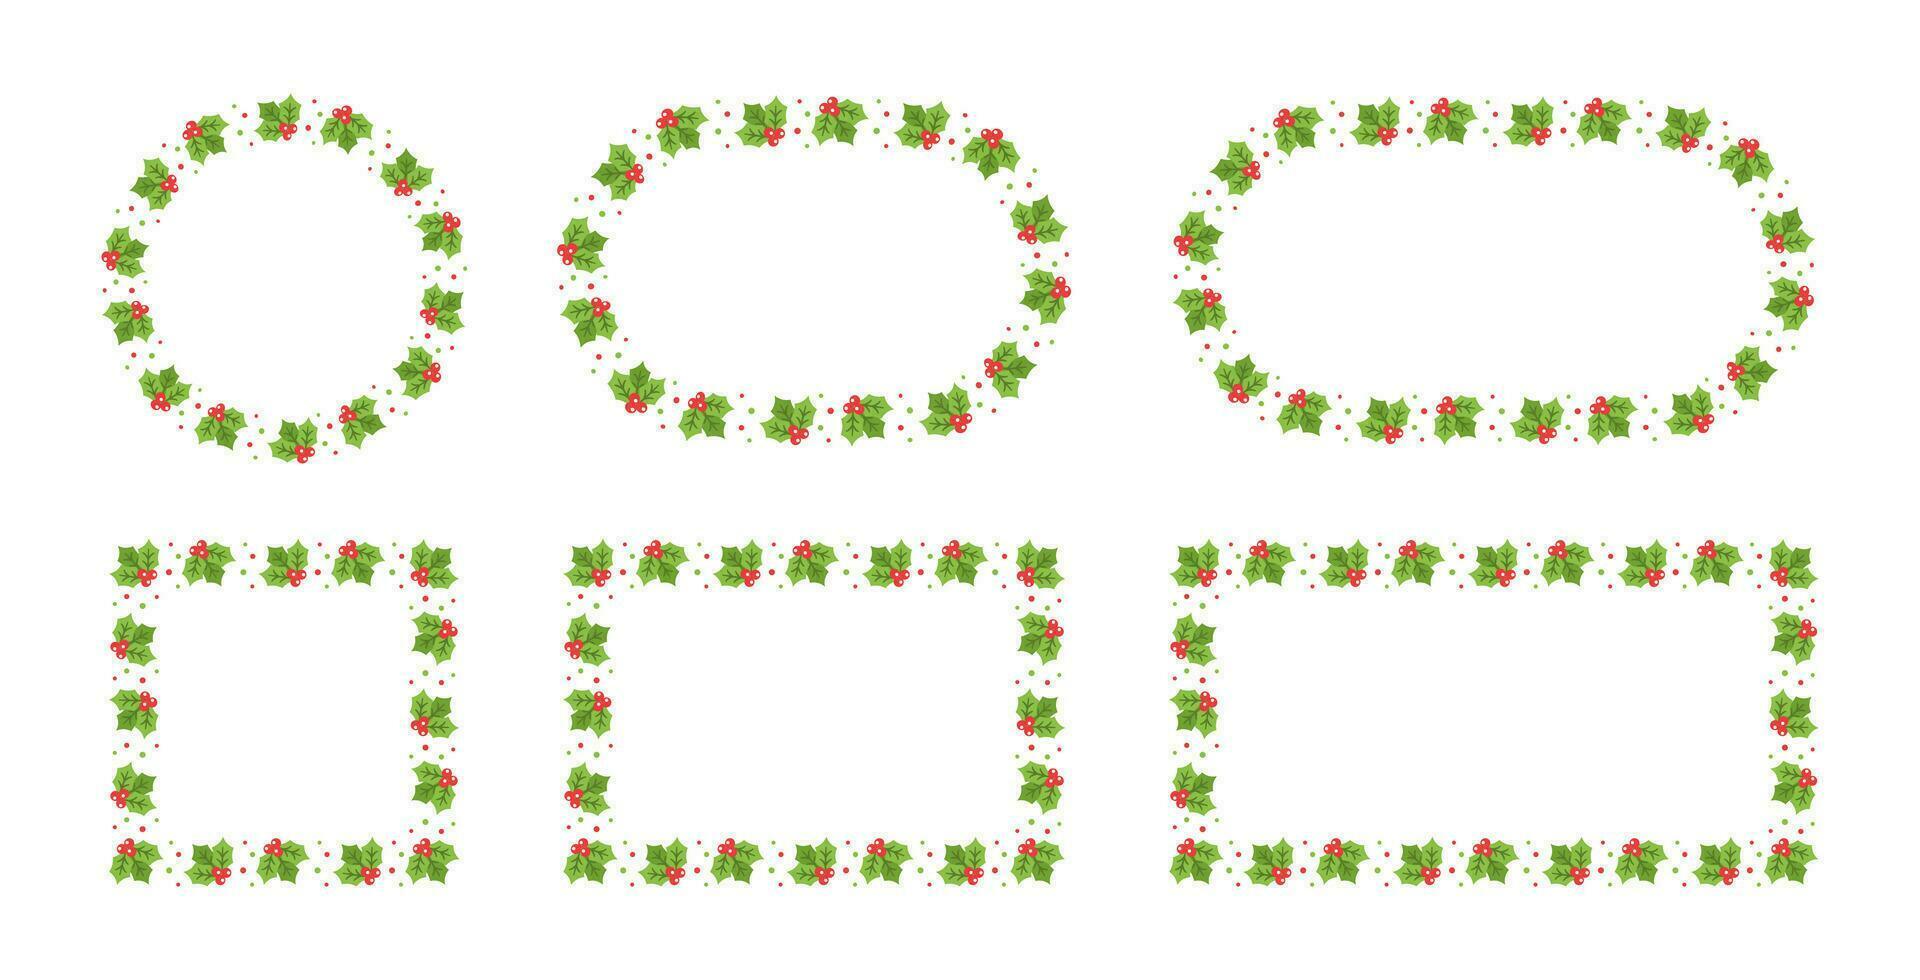 Round Mistletoe Frame, Christmas and New Year Card Template, Winter Holiday Season Plant Design Border. Vector Illustration for greetings, invitation, social media post.